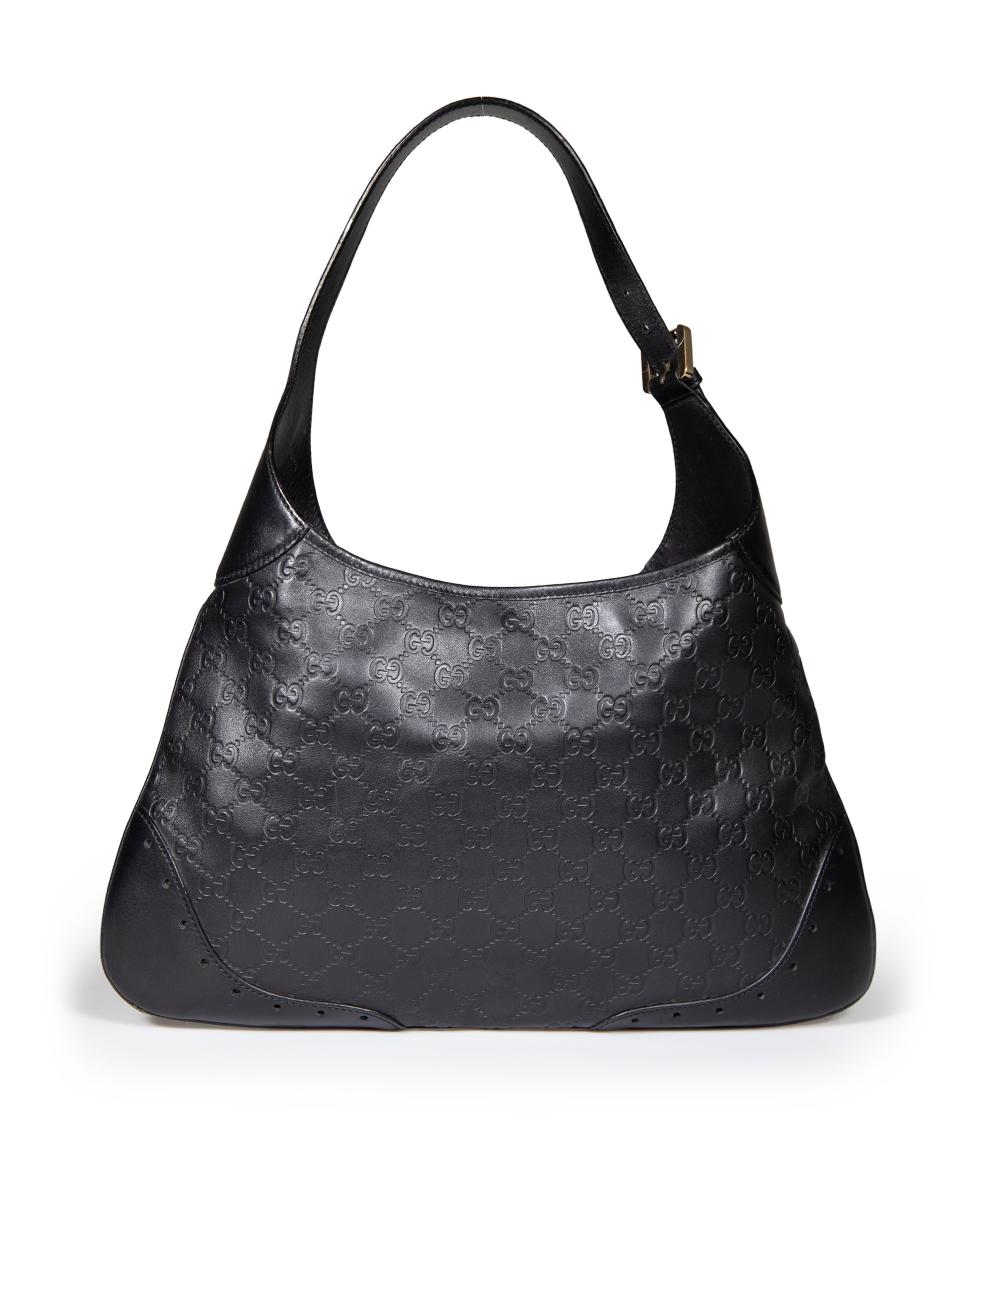 Gucci Black Leather Guccissima Medium Hobo Bag In Good Condition For Sale In London, GB